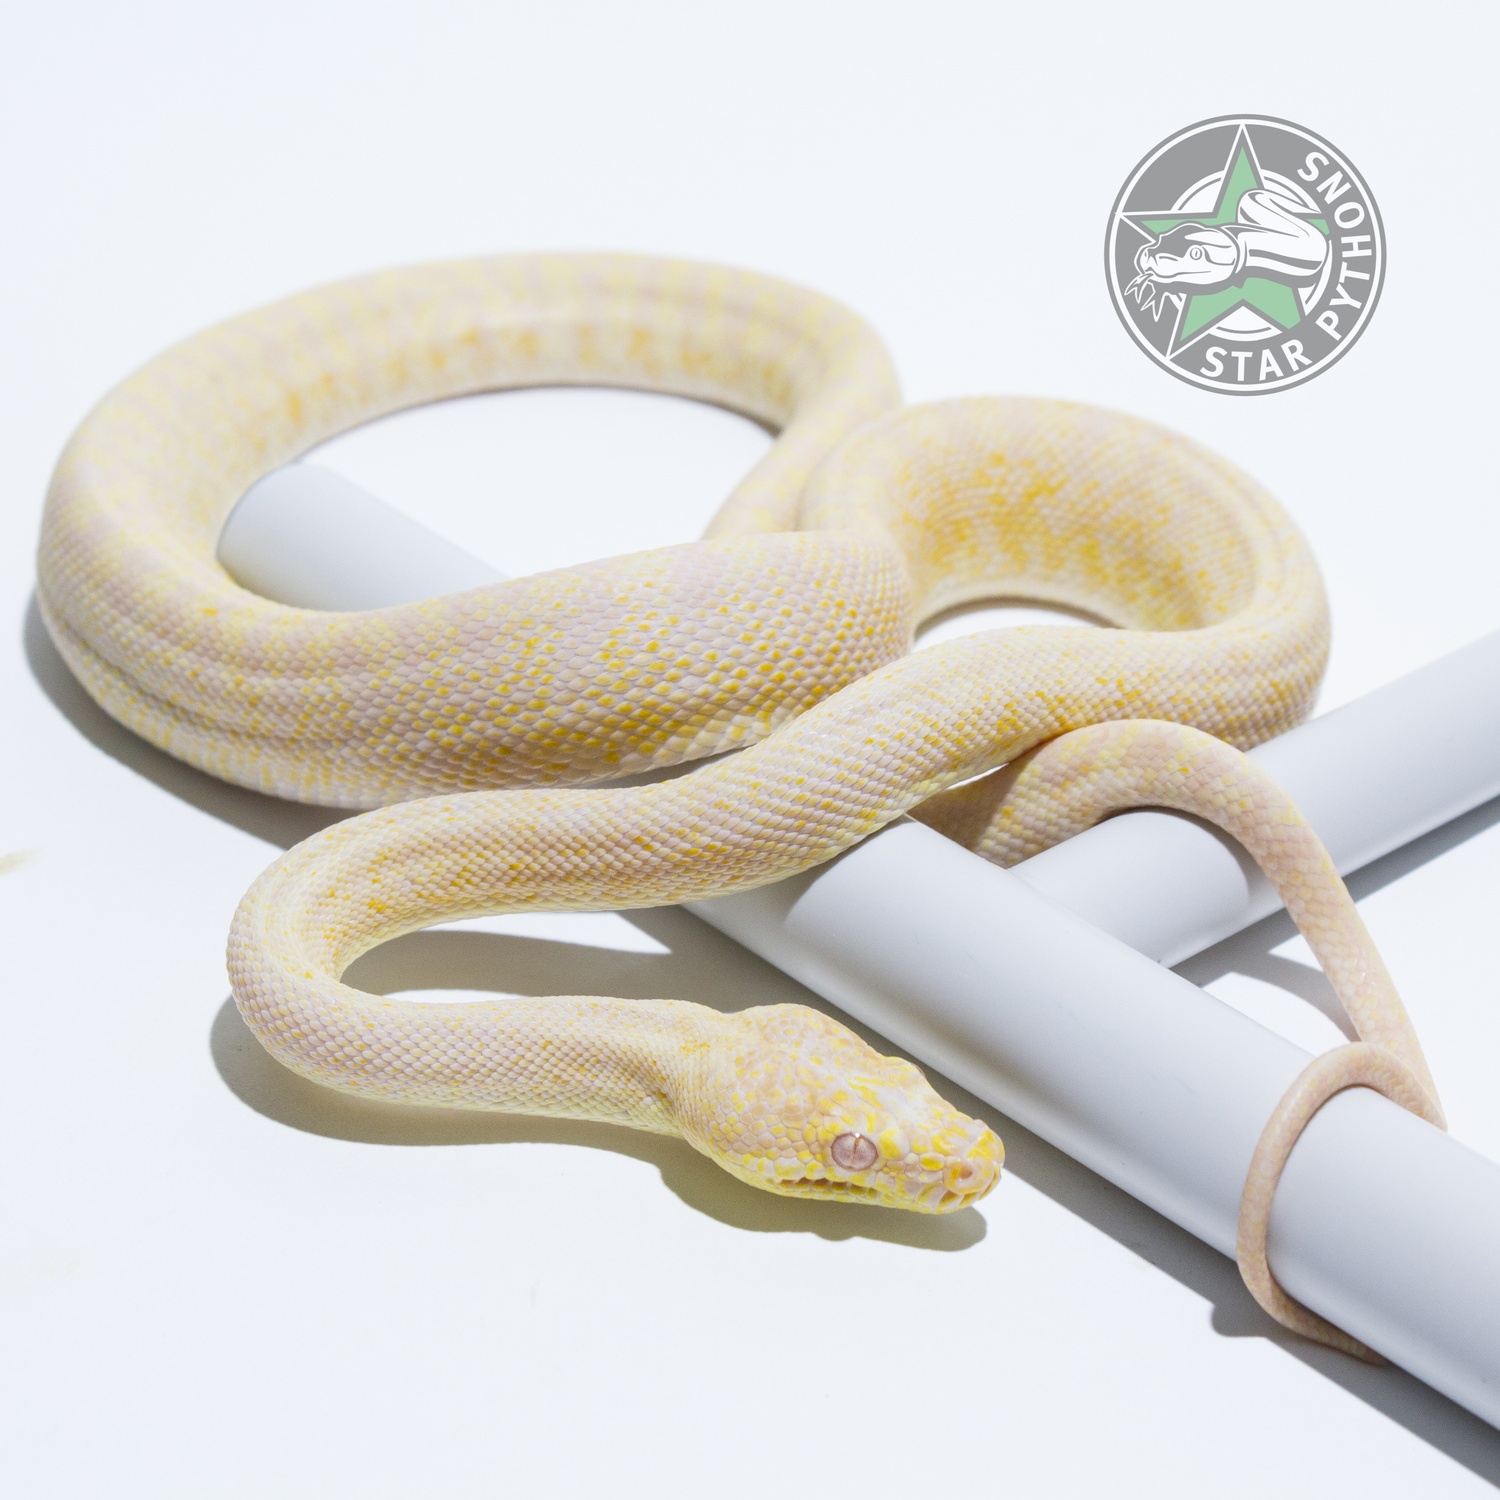 Albino Granite Irian Jaya Carpet Python by StarPythons Inc.